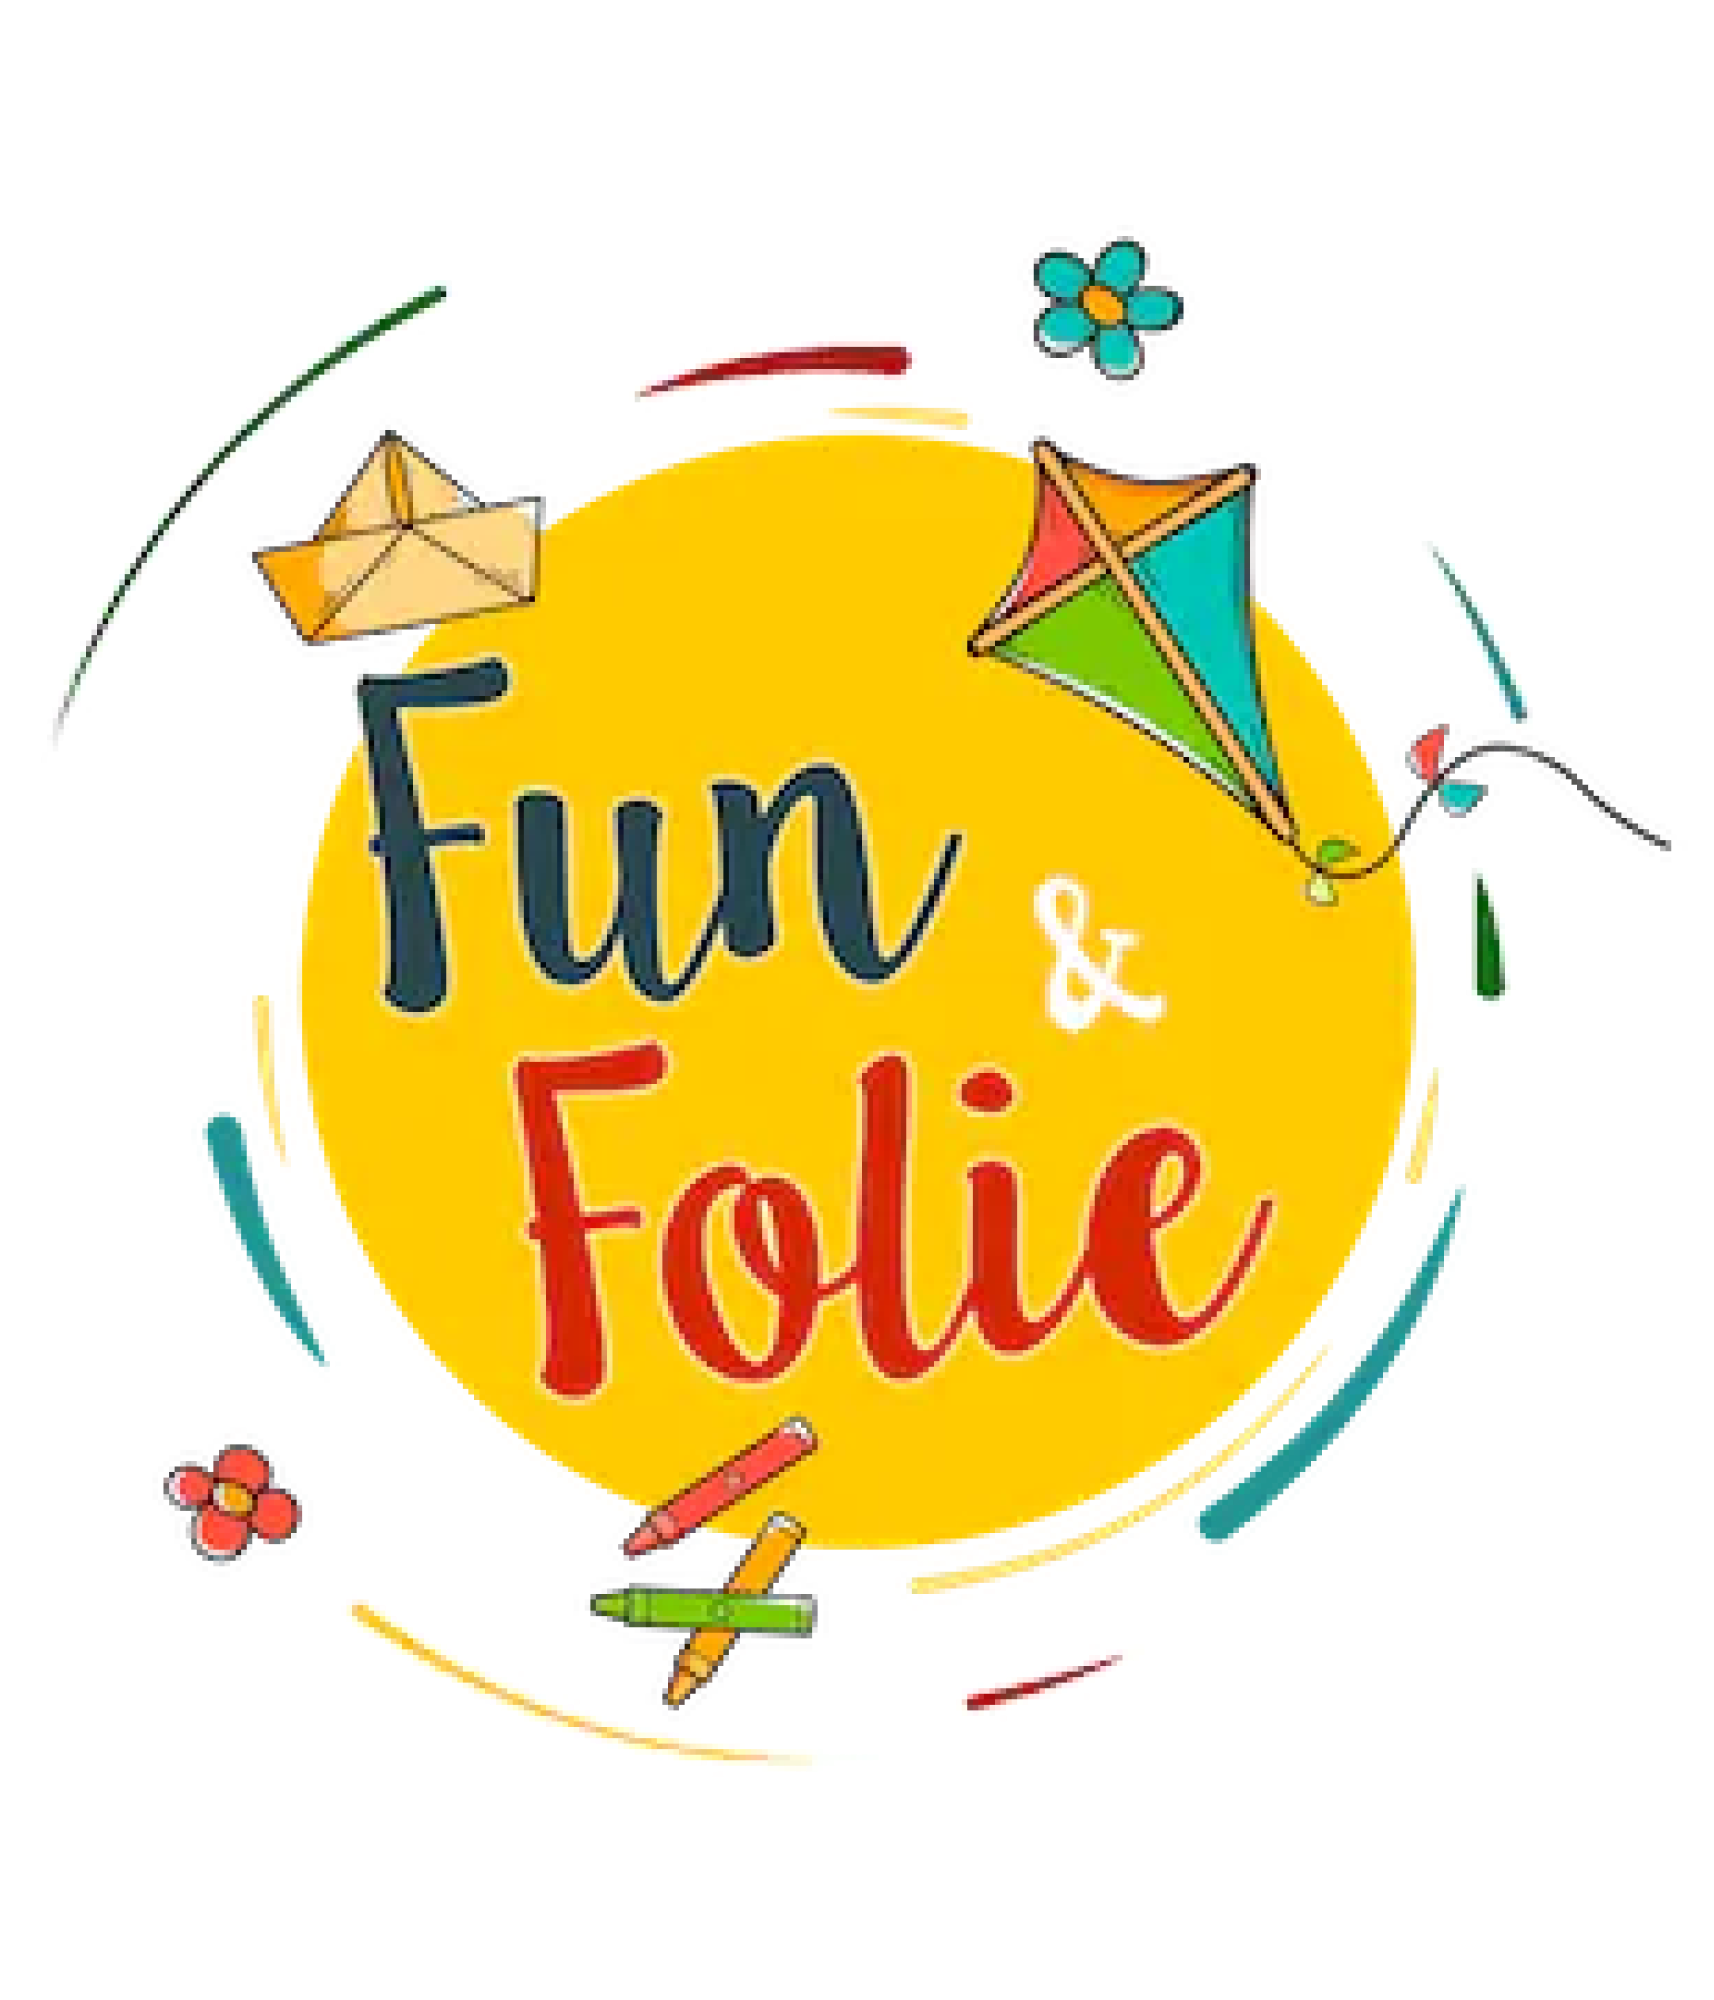 Fun & Folie by Na & Compagnie